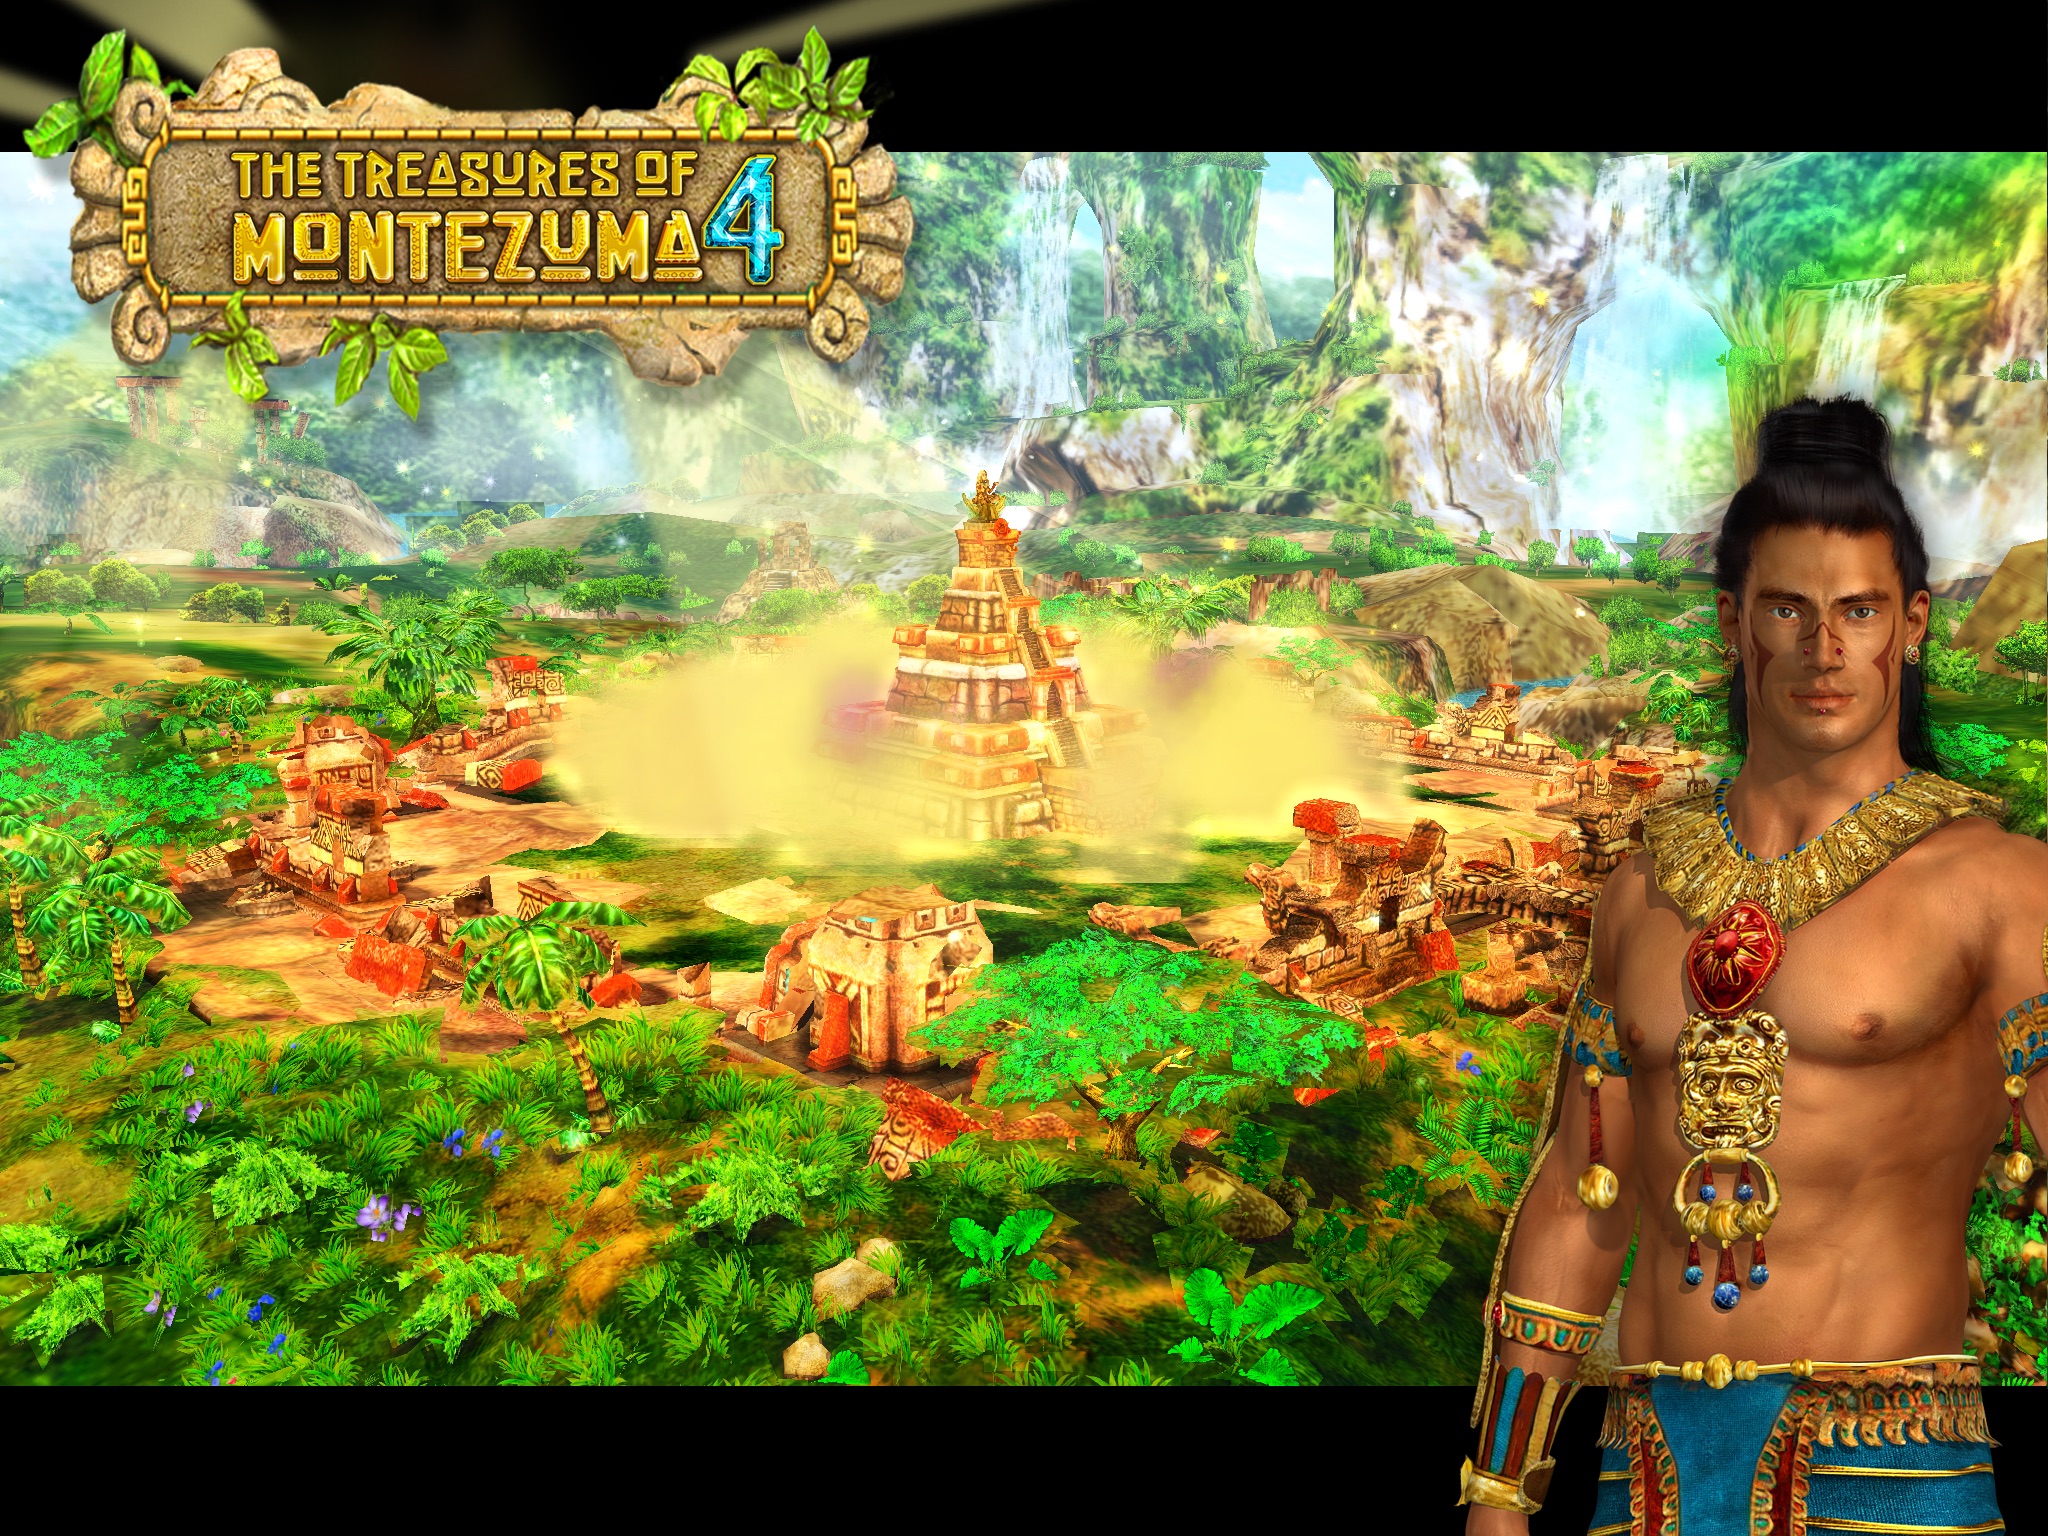 The Treasures of Montezuma 4 HD screenshot 2